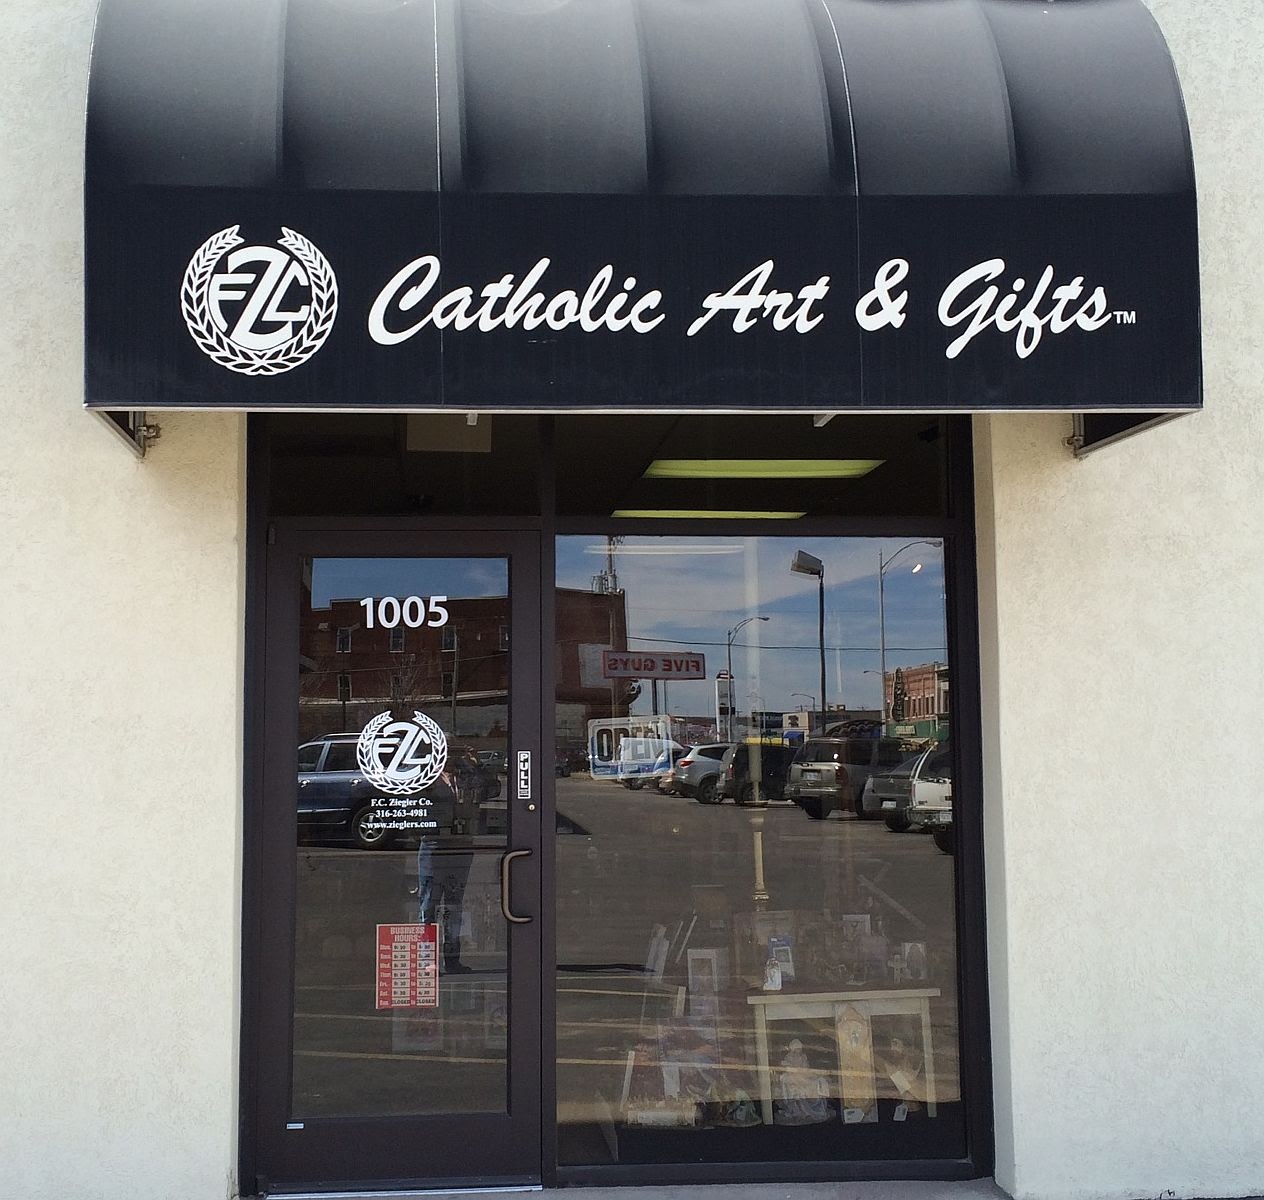 F.C. Ziegler Co. - Catholic Art & Gifts